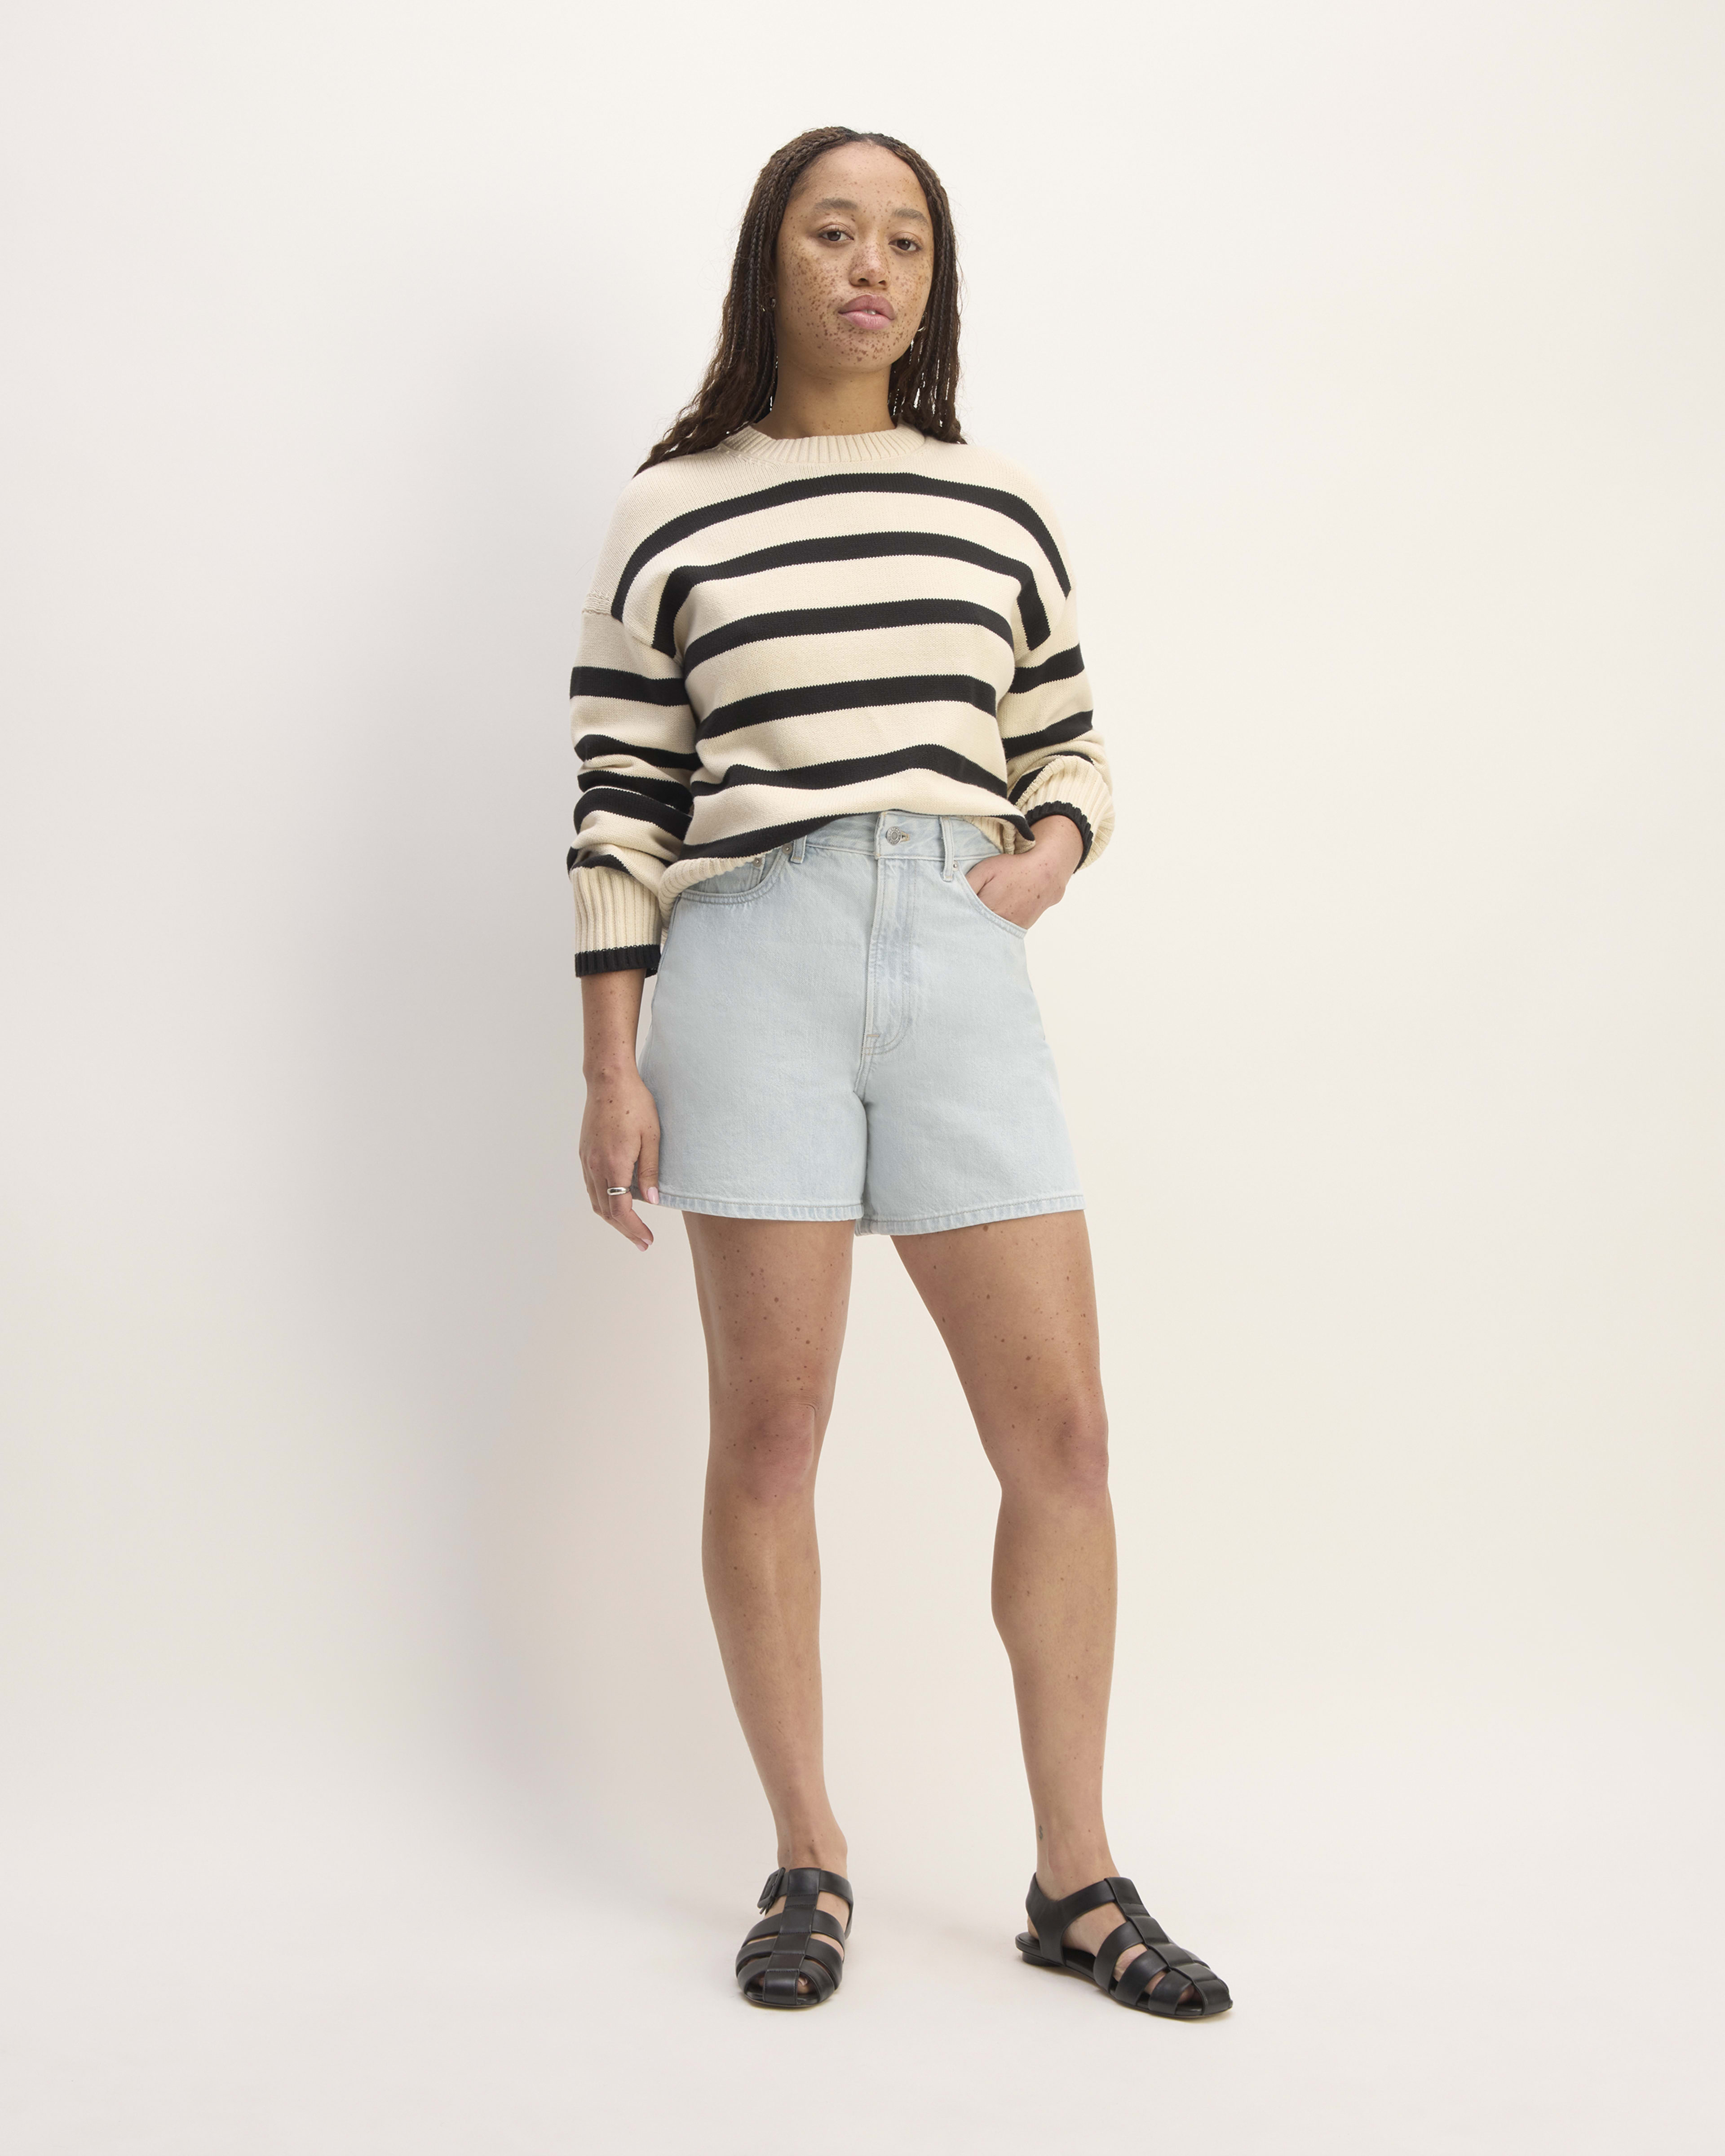 Women's Shorts  Shorts & Skirts – Everlane